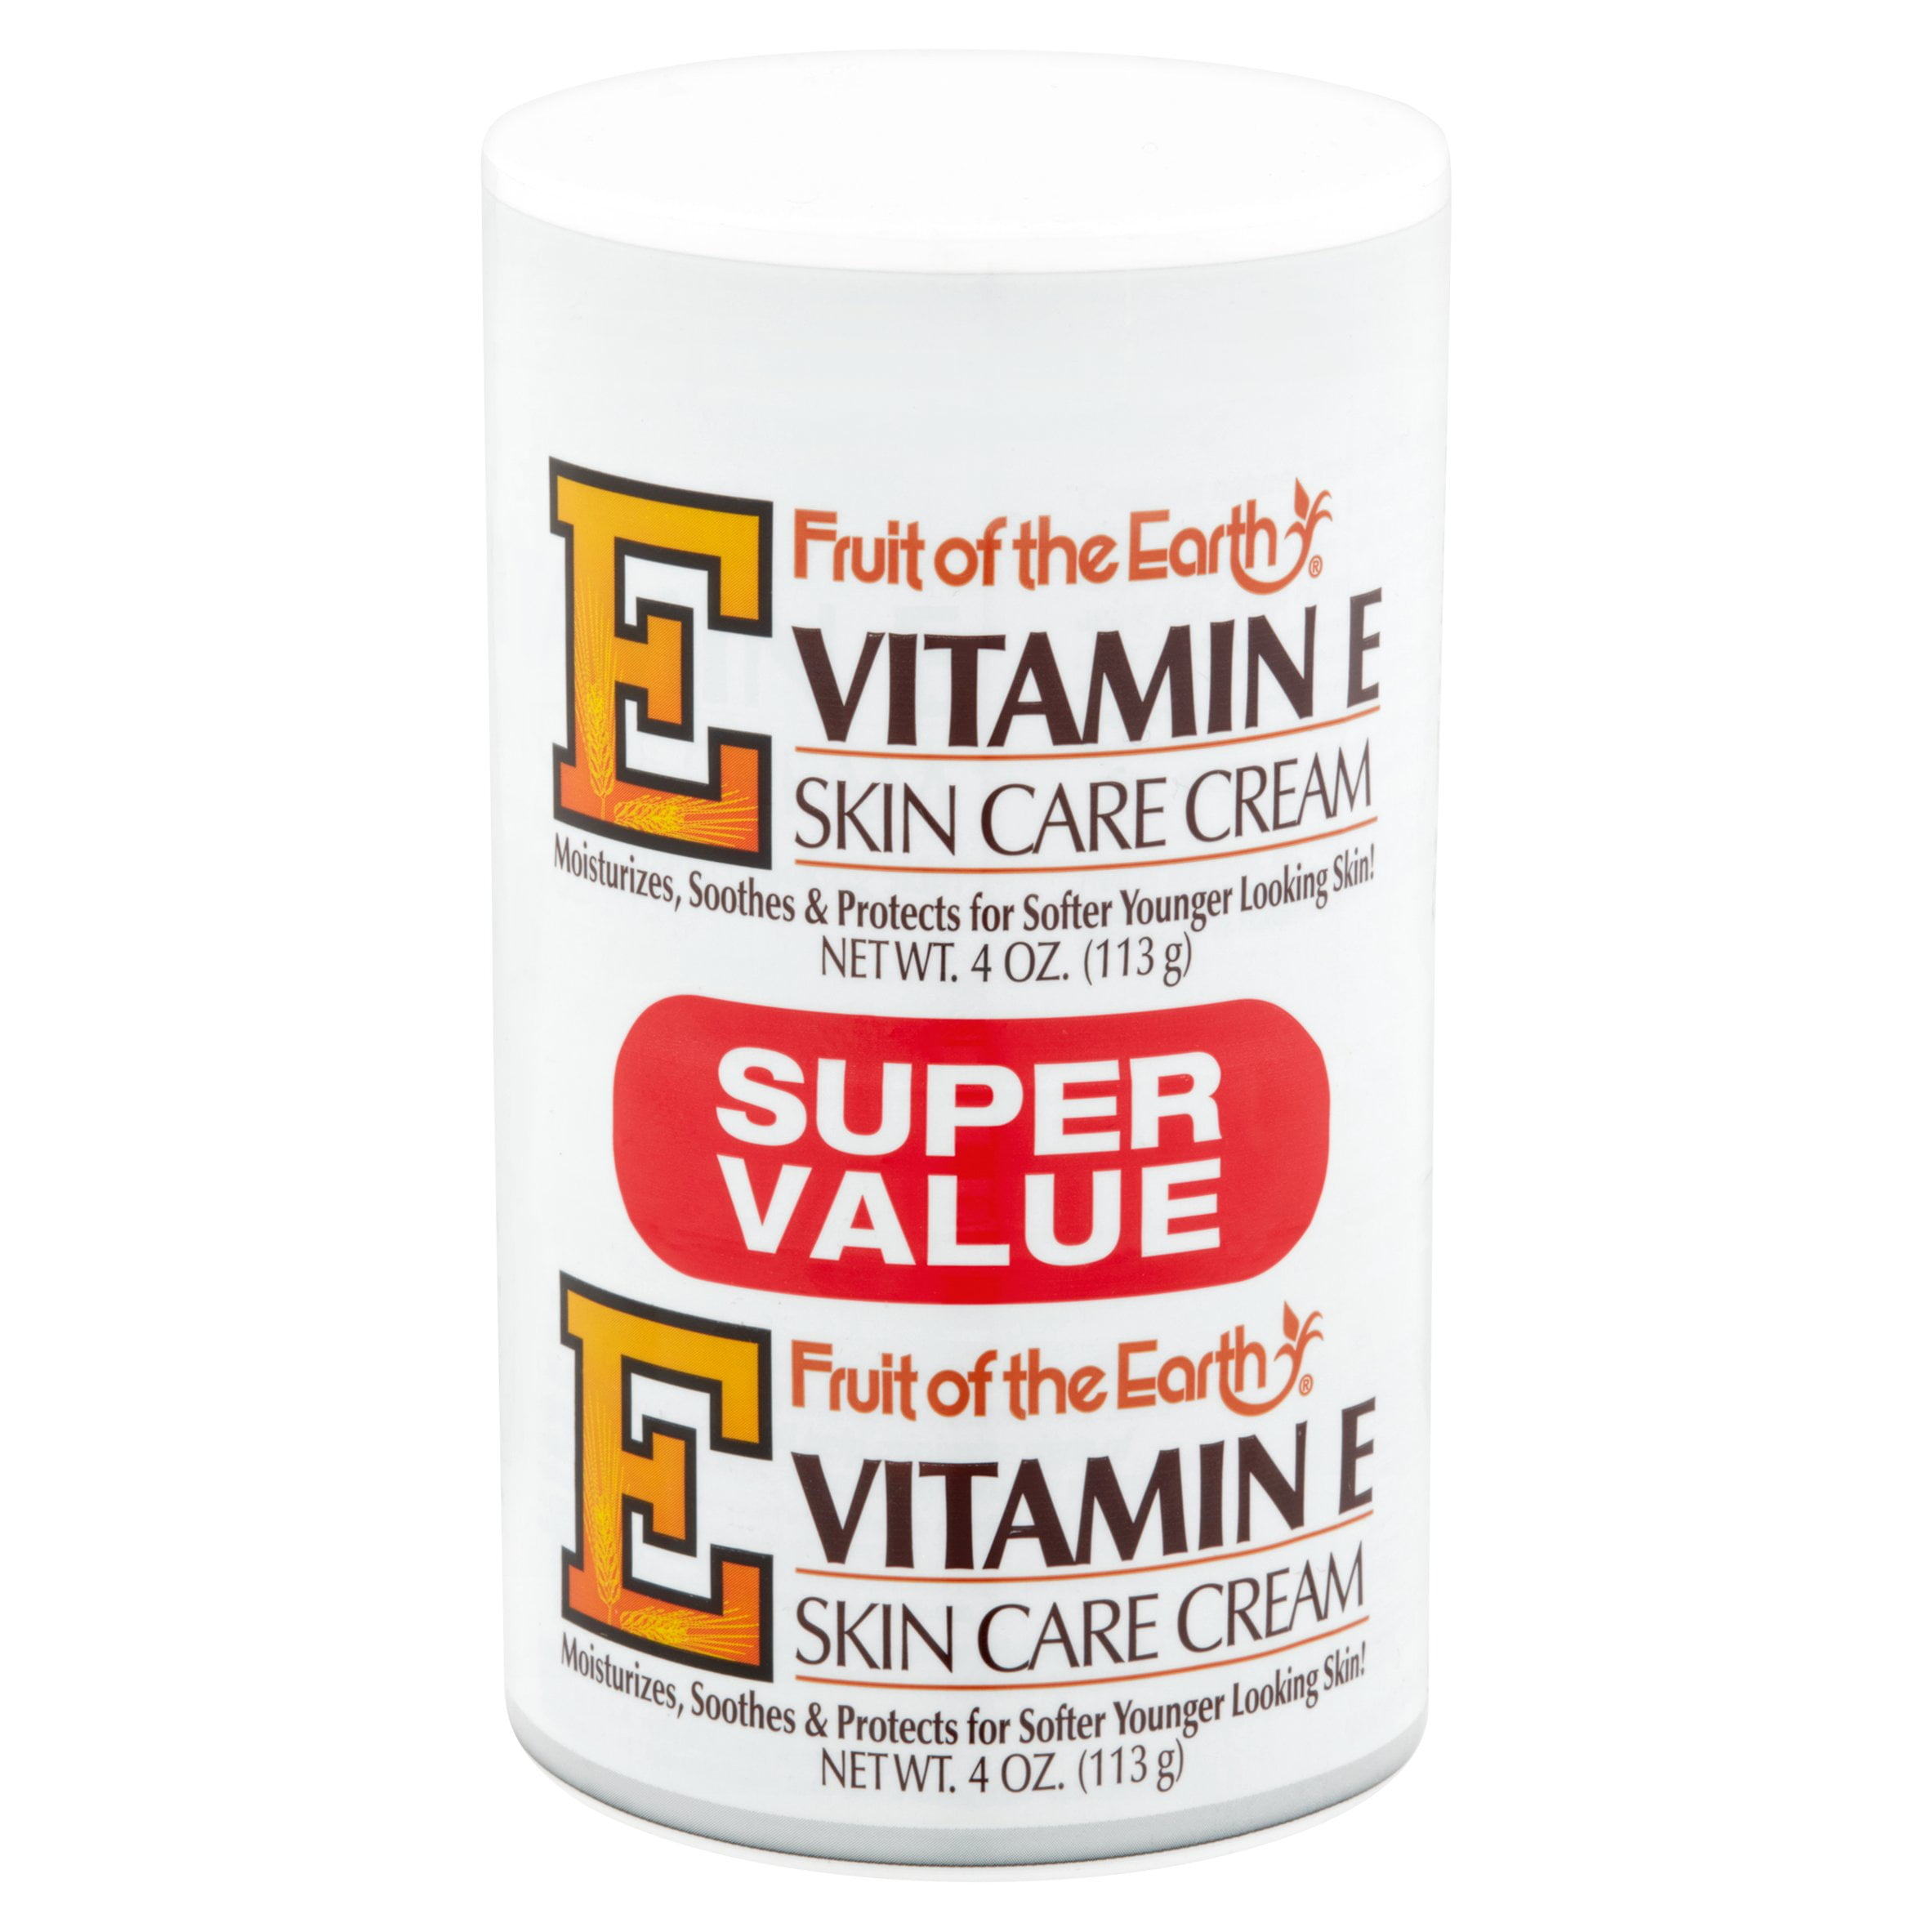 Fruit of the Earth Vitamin Care Cream Super 4 Oz., 2 pack - Walmart.com